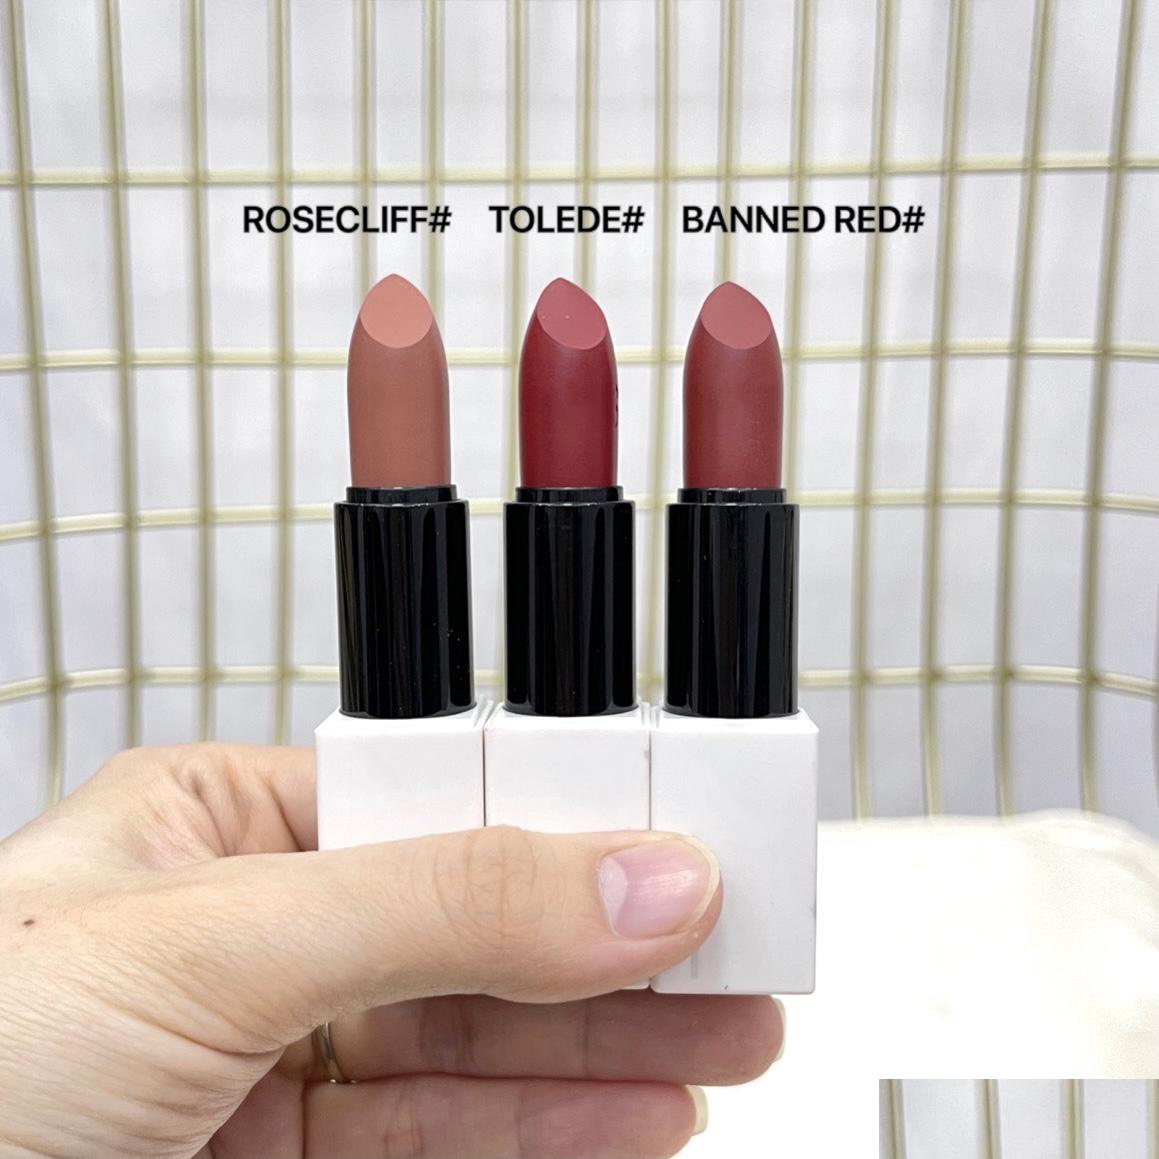 

Lipstick Drop Top Quality Brand Satin Lipstick Matte Lipsticks 3 5G Rouge A Levres Color Waterproof Long Lasting Lip Makeup Cosmetic Dhmwt, Randomly sended color